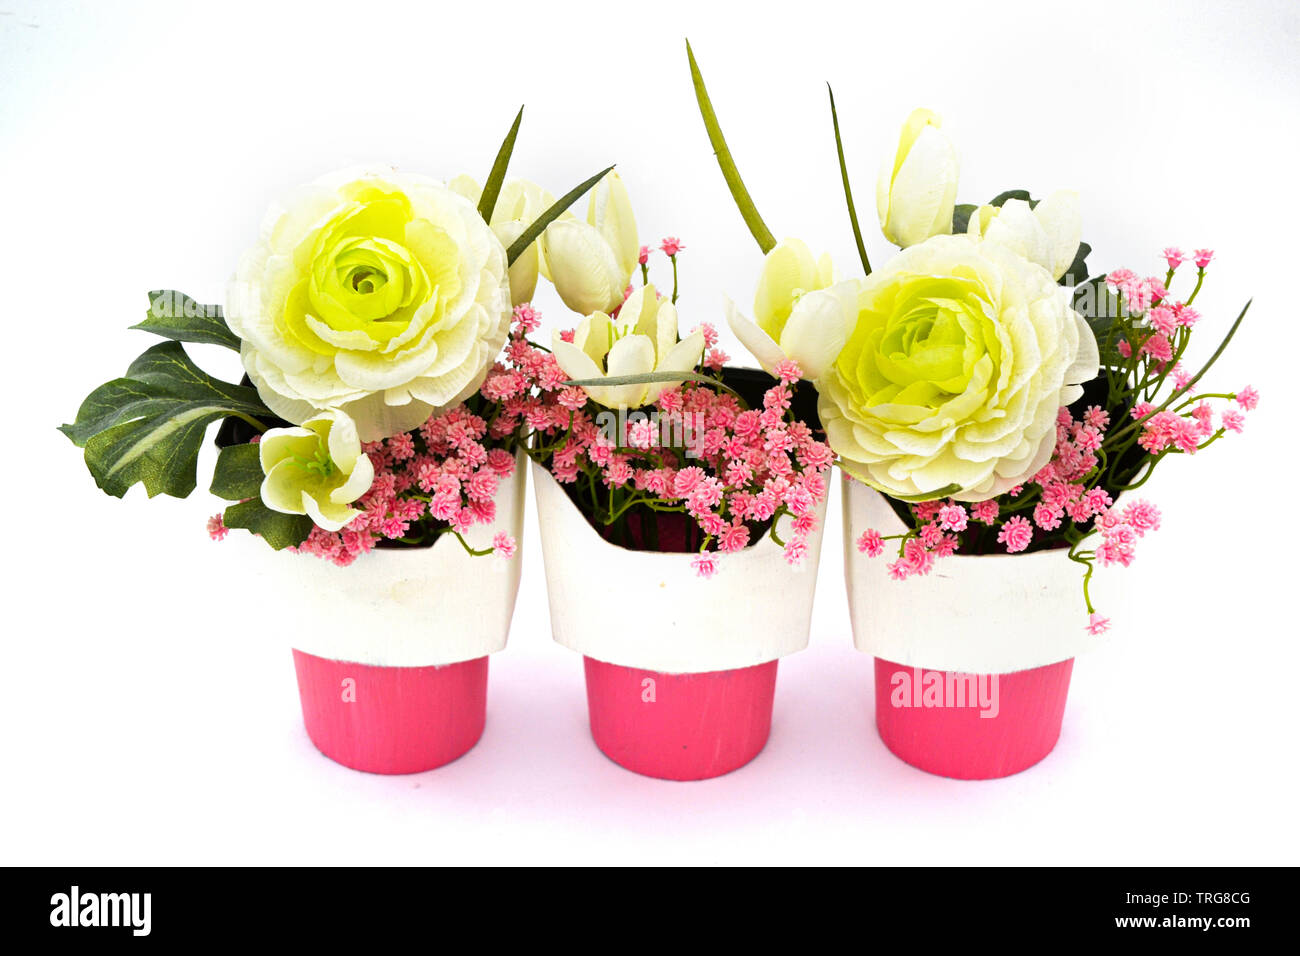 Blumen / Weiße Rose / Blätter Blüten / Blumenmeer / Rosa / Rosa/Weißer Blumentopf / Flores / White Rose / Hojas / Flores rosas flor / Mar / rosa / Foto de stock